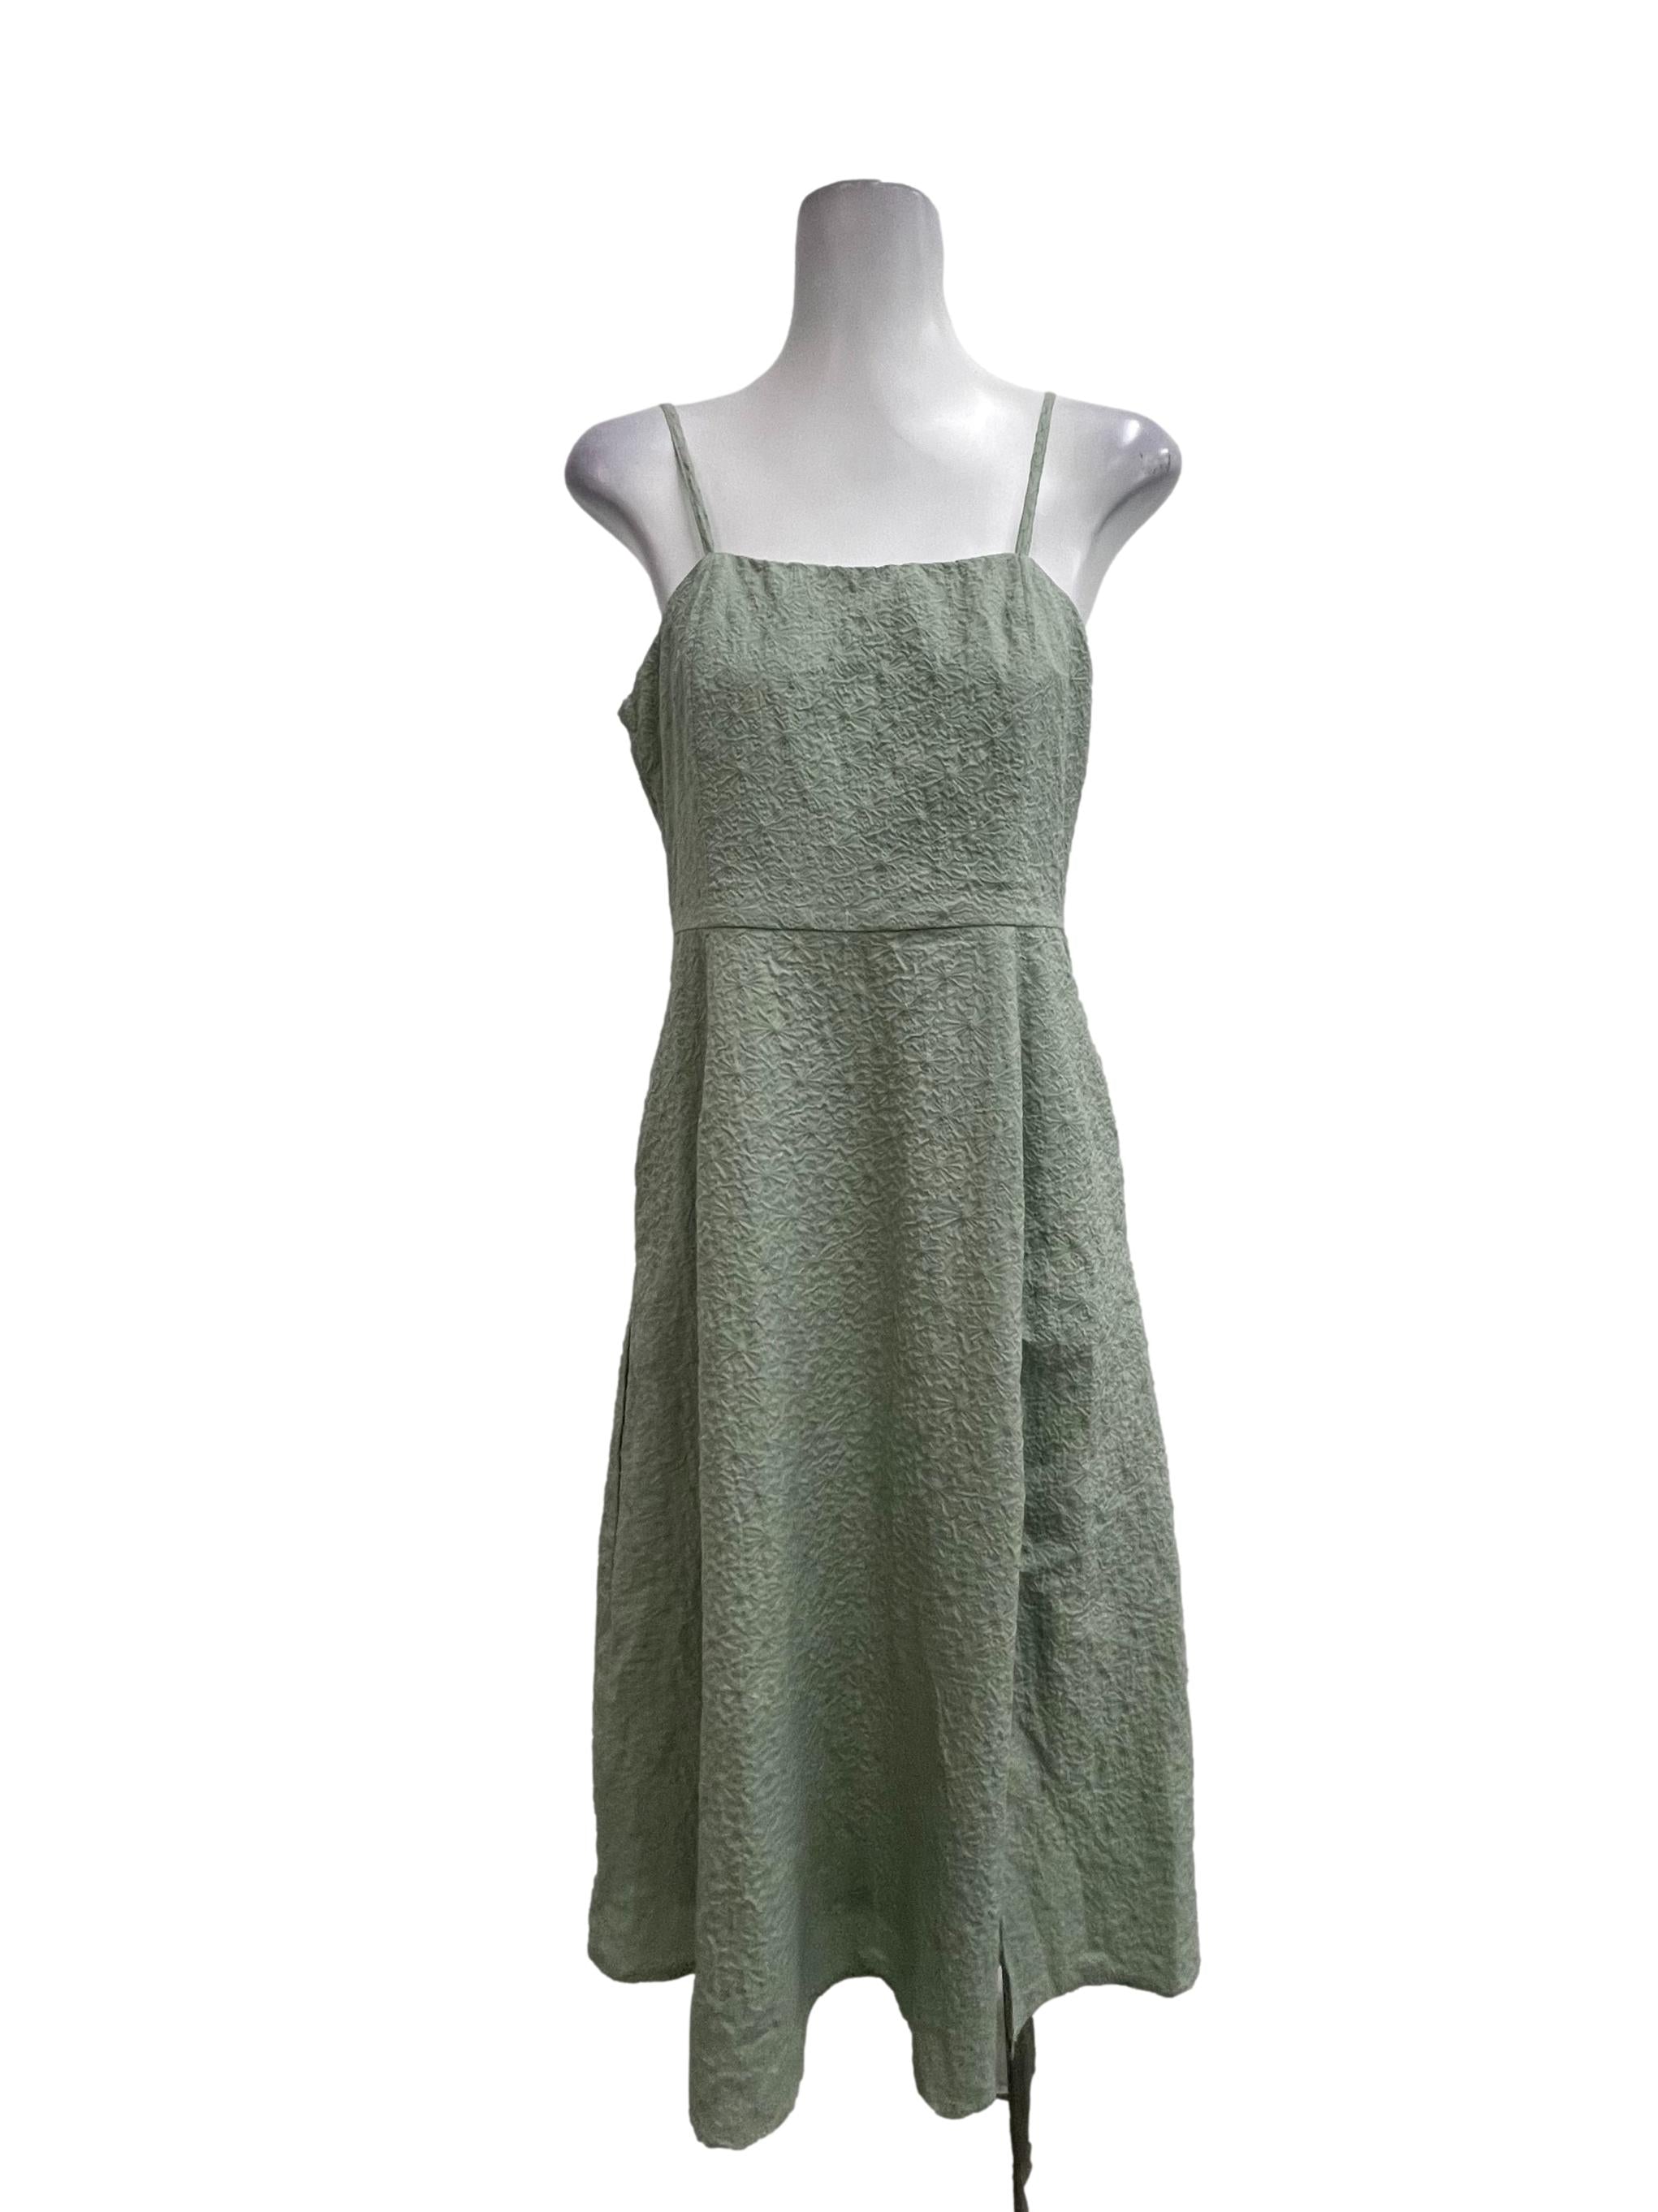 Green Floral Textured Spag Dress